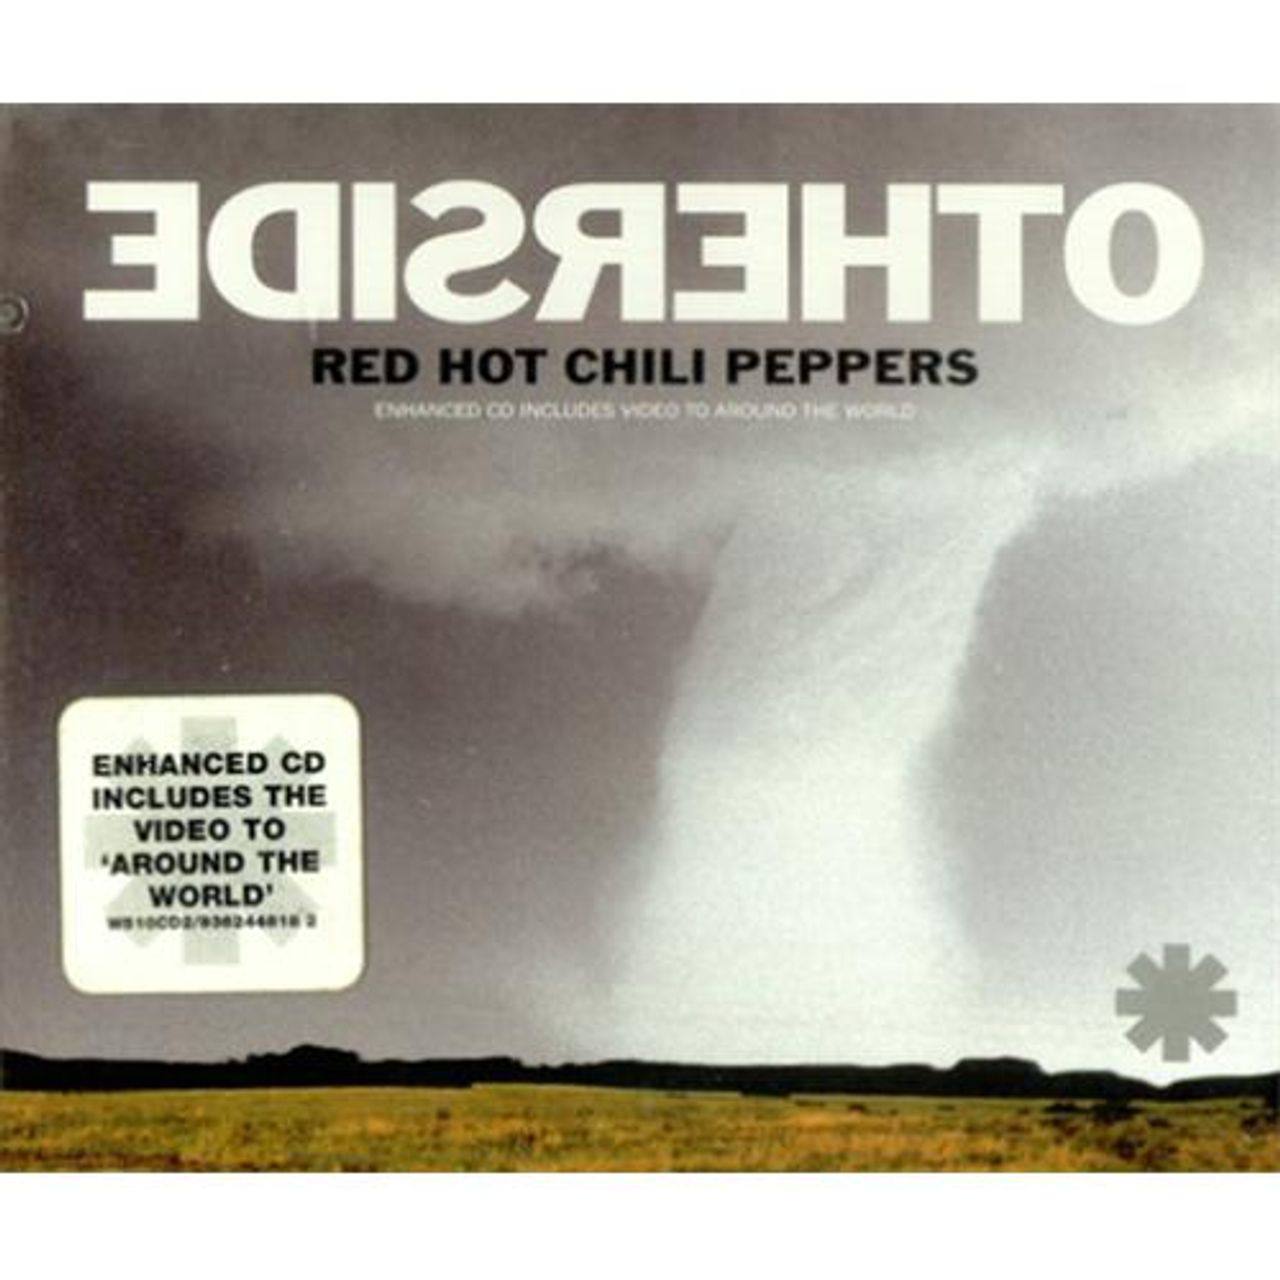 Hot Chili Peppers Otherside UK 2-CD set — RareVinyl.com